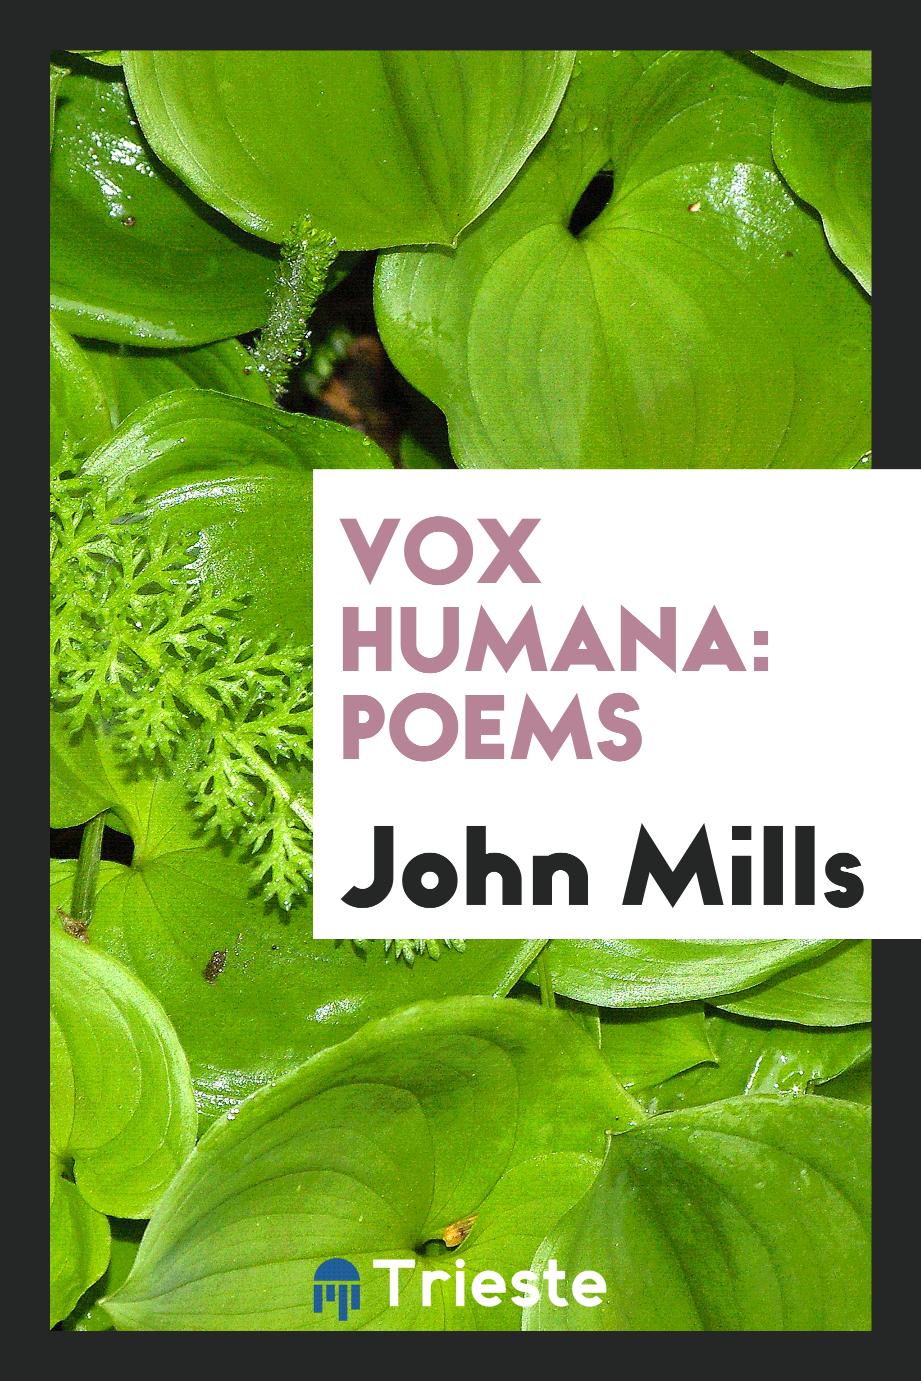 Vox Humana: Poems